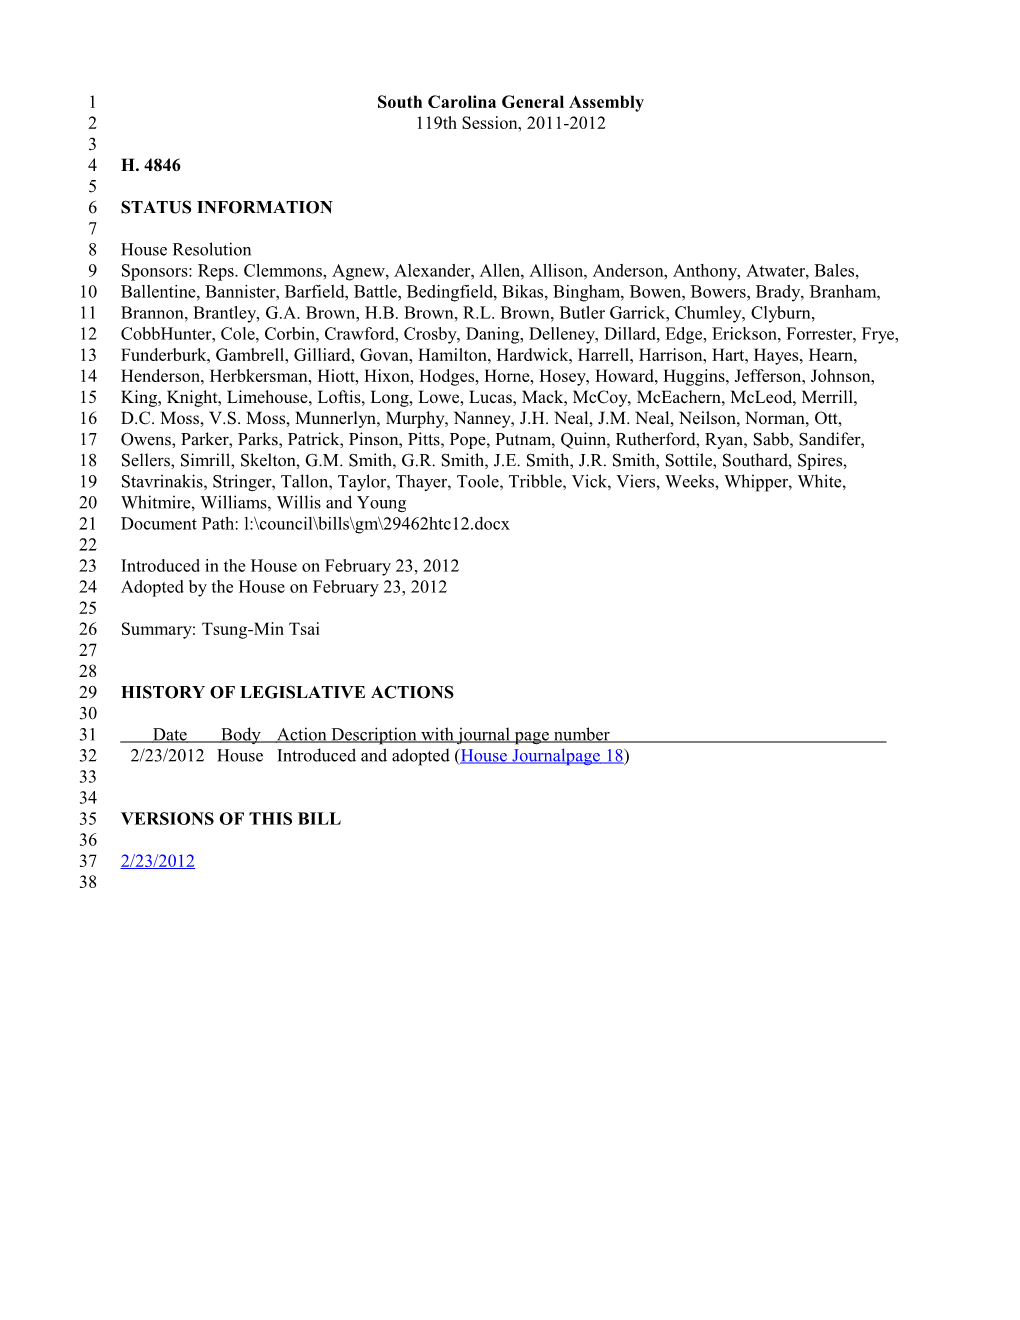 2011-2012 Bill 4846: Tsung-Min Tsai - South Carolina Legislature Online